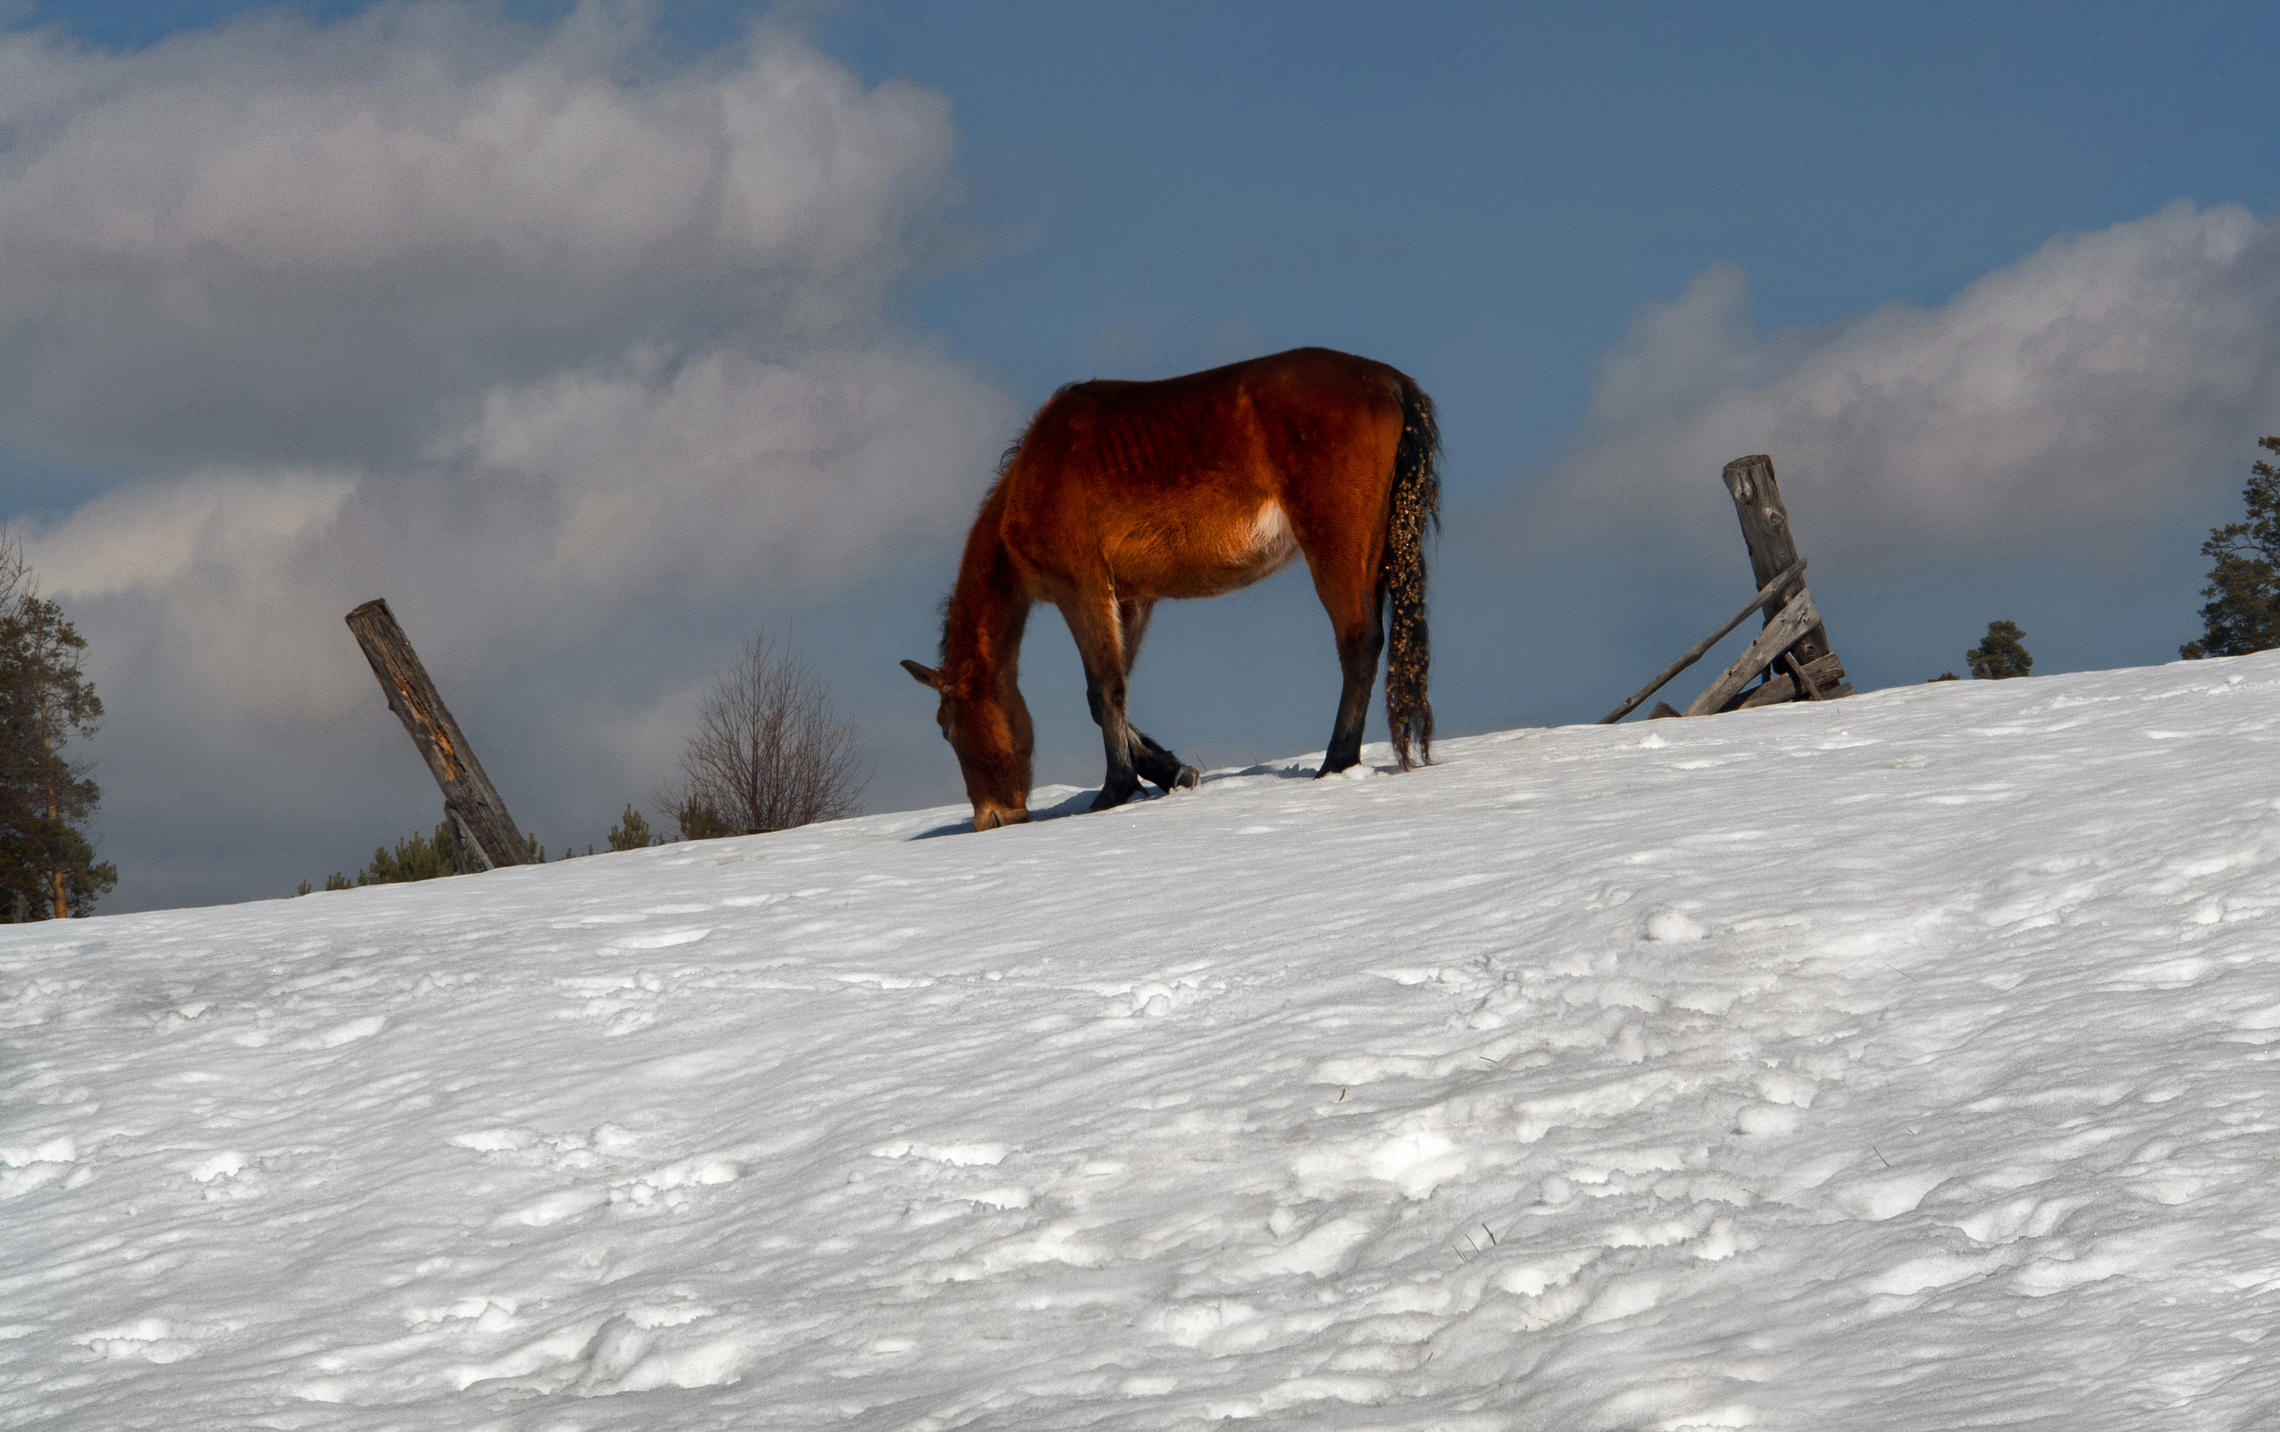 Лошадь на снегу